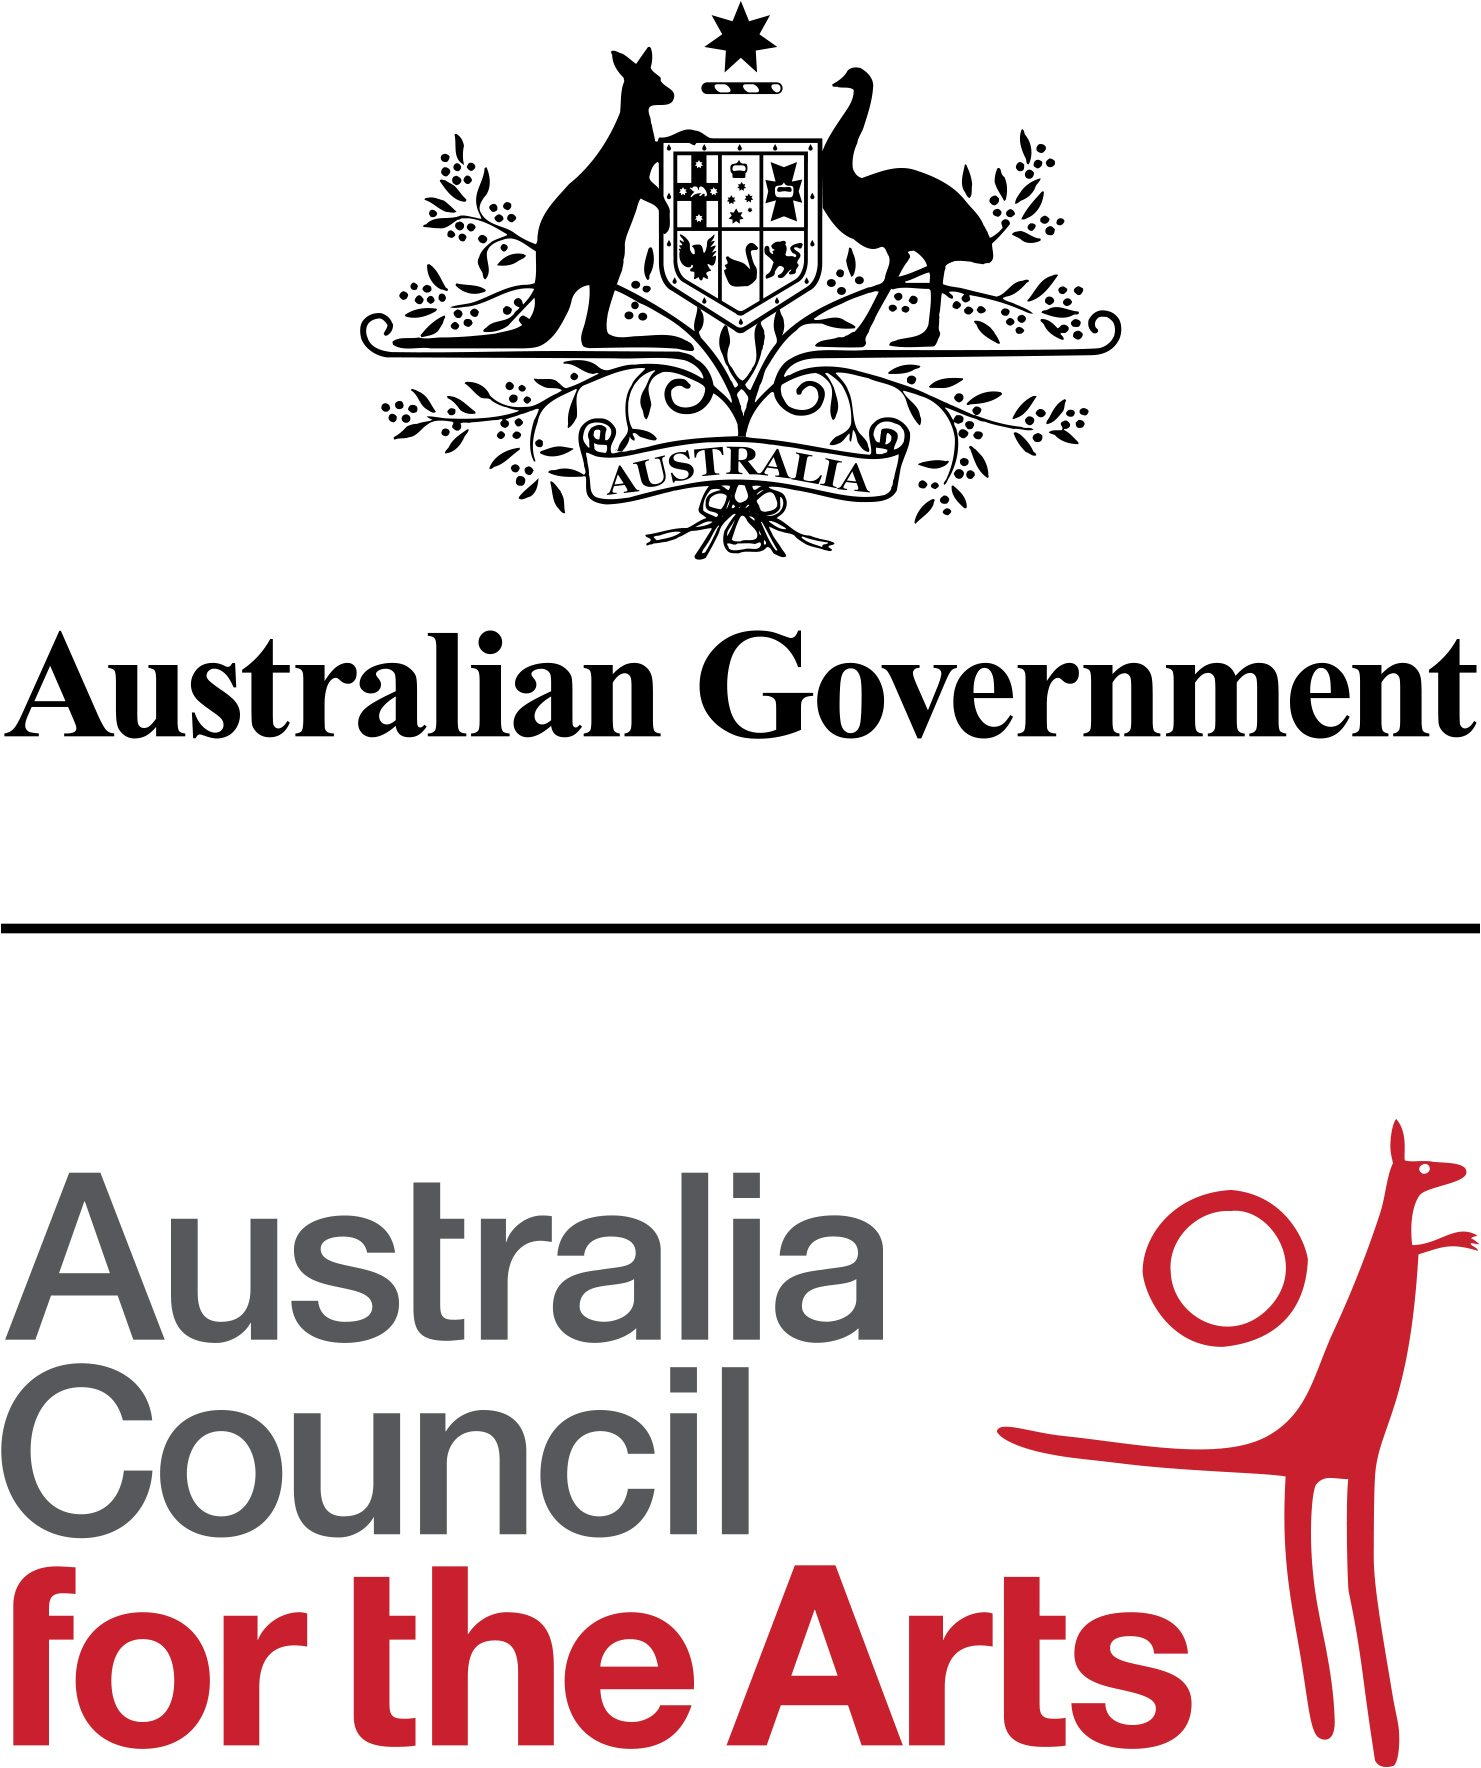 Australia Council For the Arts